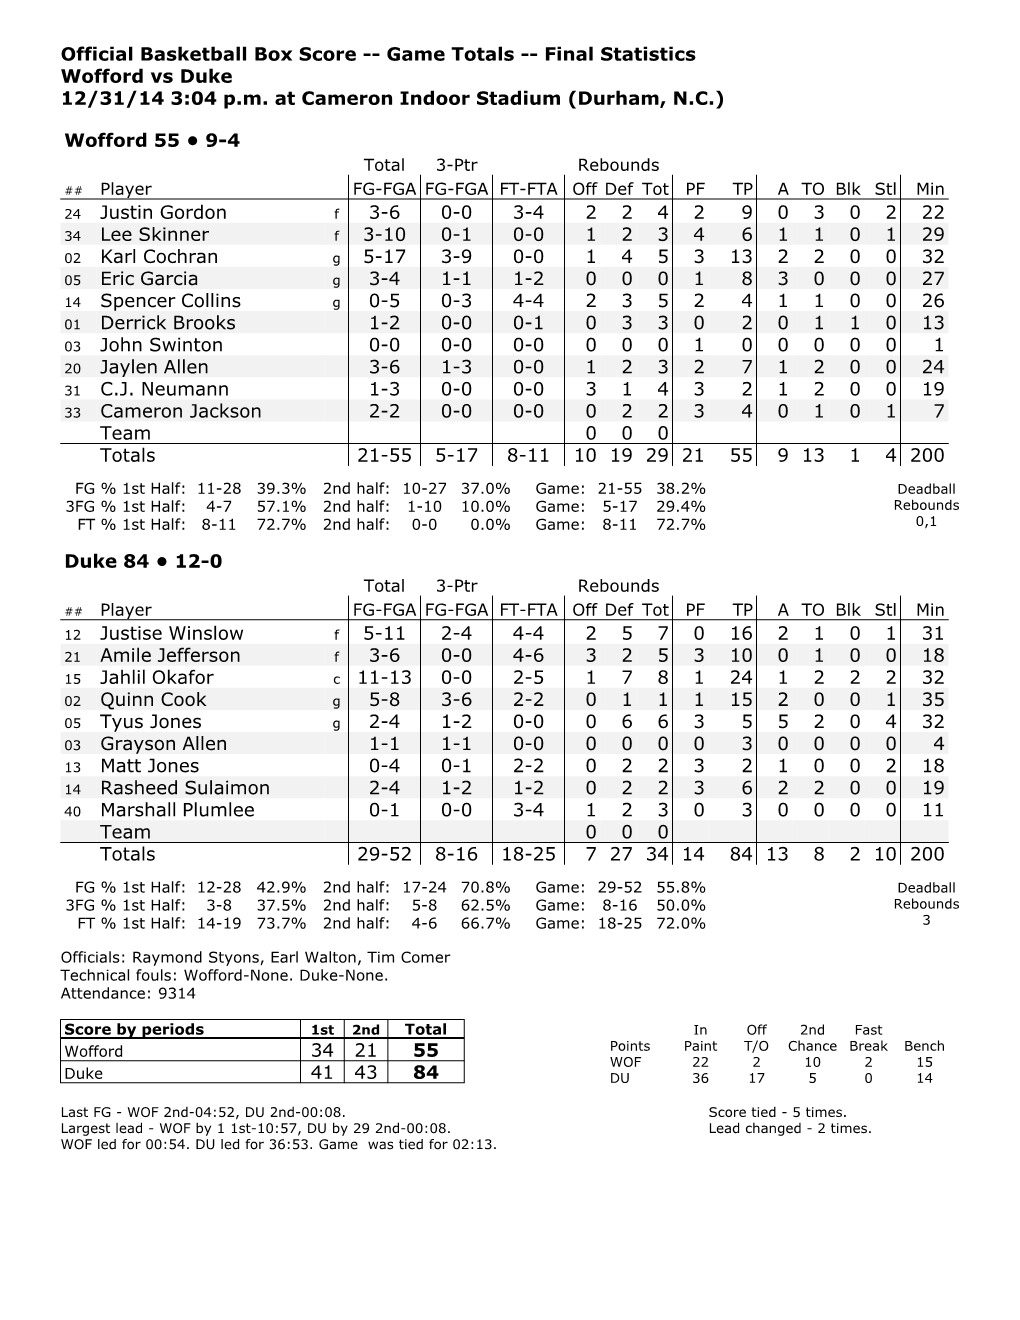 Official Basketball Box Score -- Game Totals -- Final Statistics Wofford Vs Duke 12/31/14 3:04 P.M. at Cameron Indoor Stadium (Durham, N.C.)